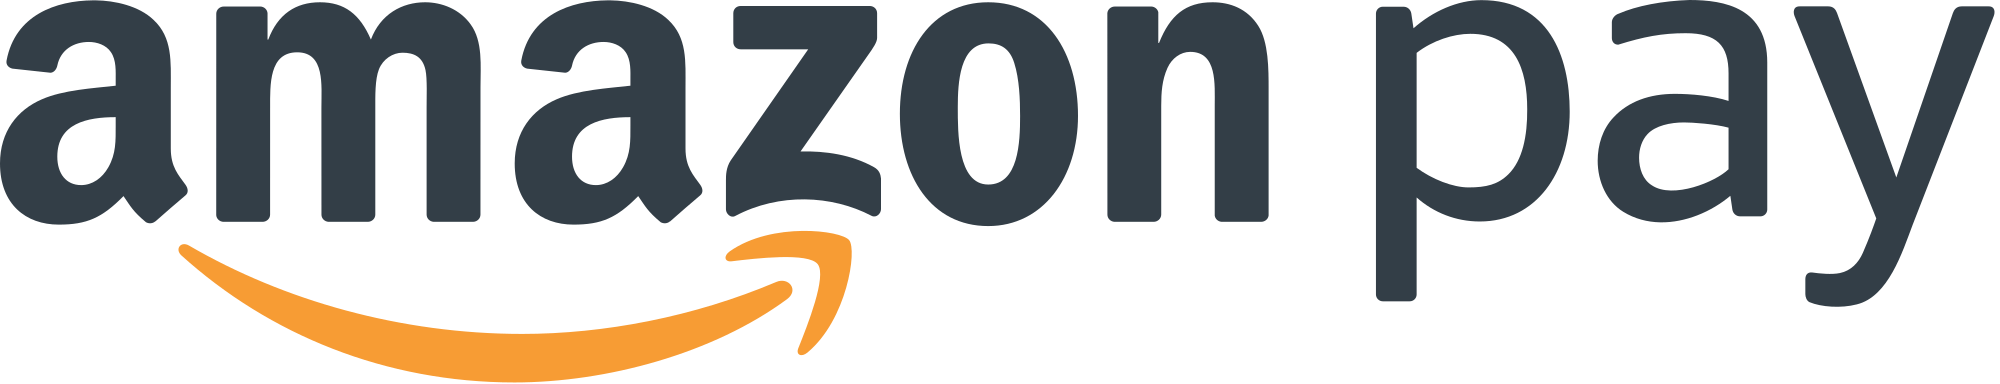 Pay Amazon Logo - File:Amazon Pay logo.svg - Wikimedia Commons